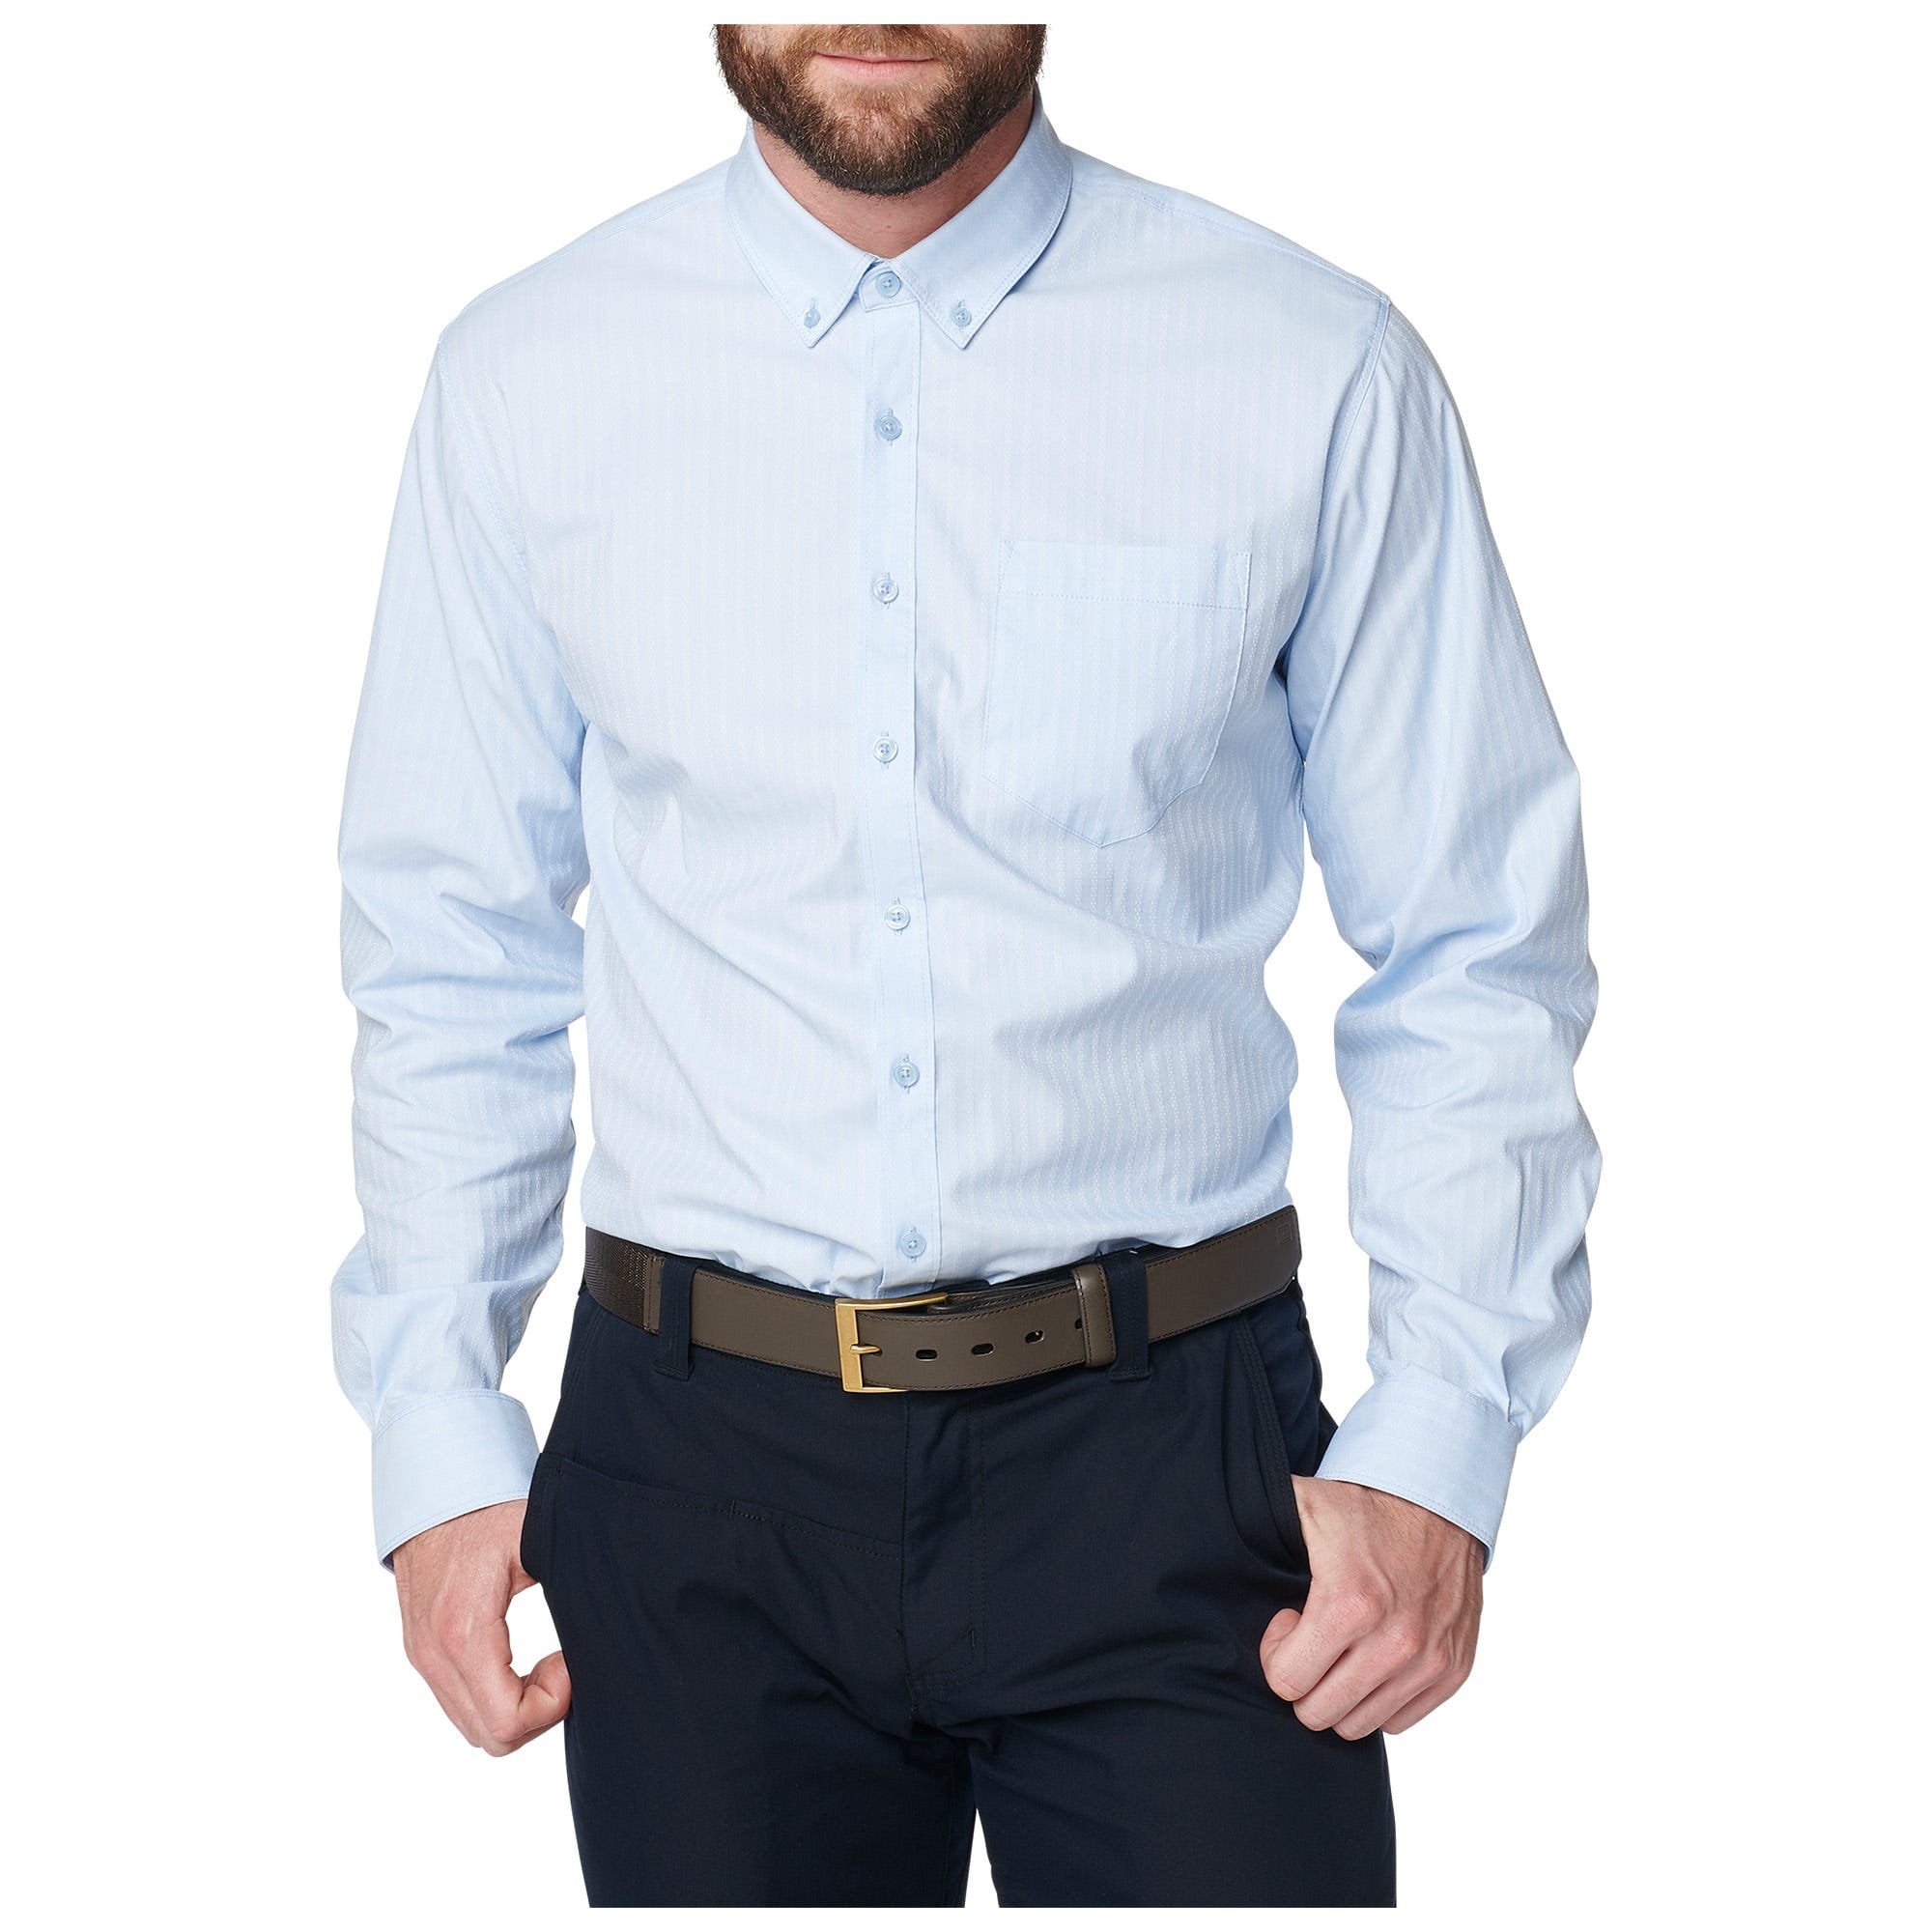 5.11 Tactical Men's XPRT Long Sleeve Shirt Style 72091